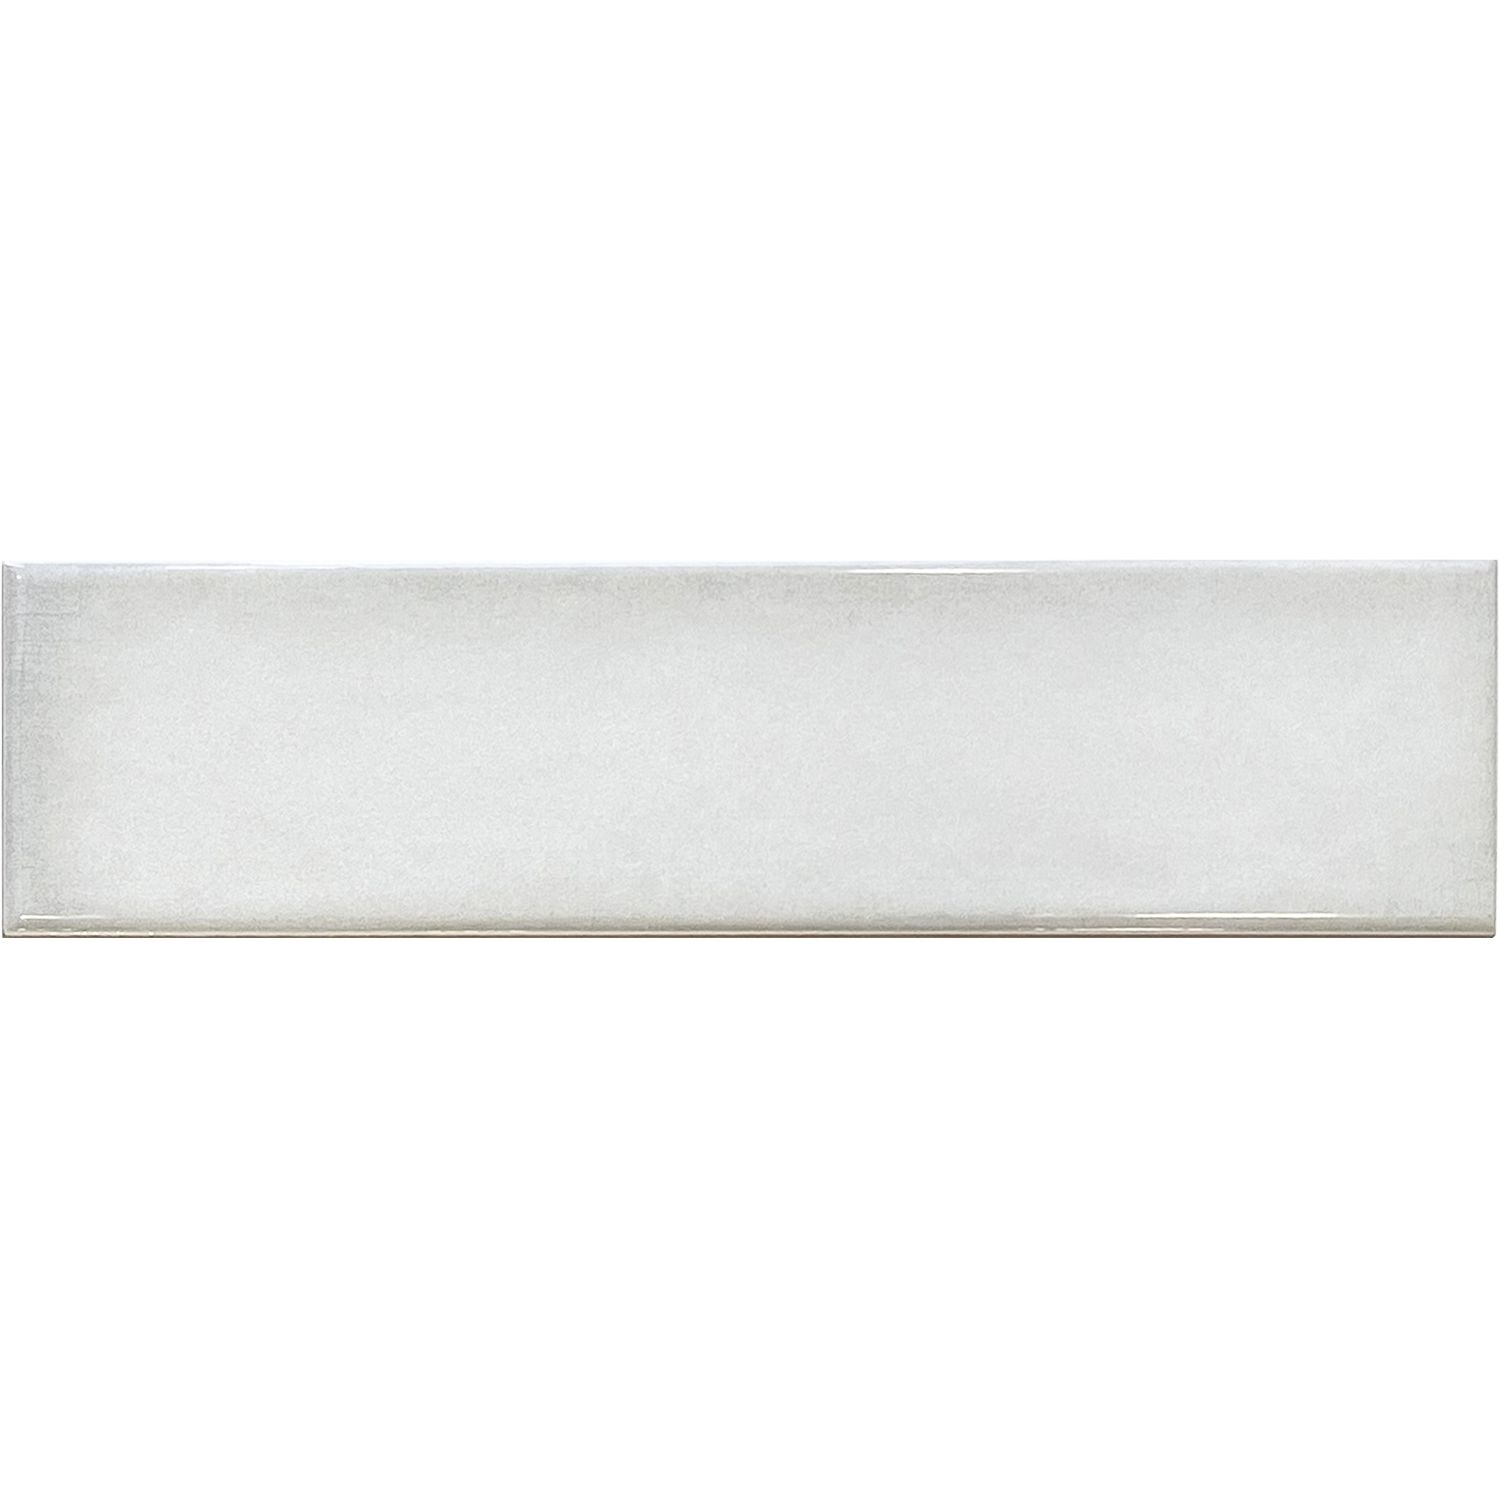 Керамическая Плитка Decocer Monte Monte White 10x40 см С0005601